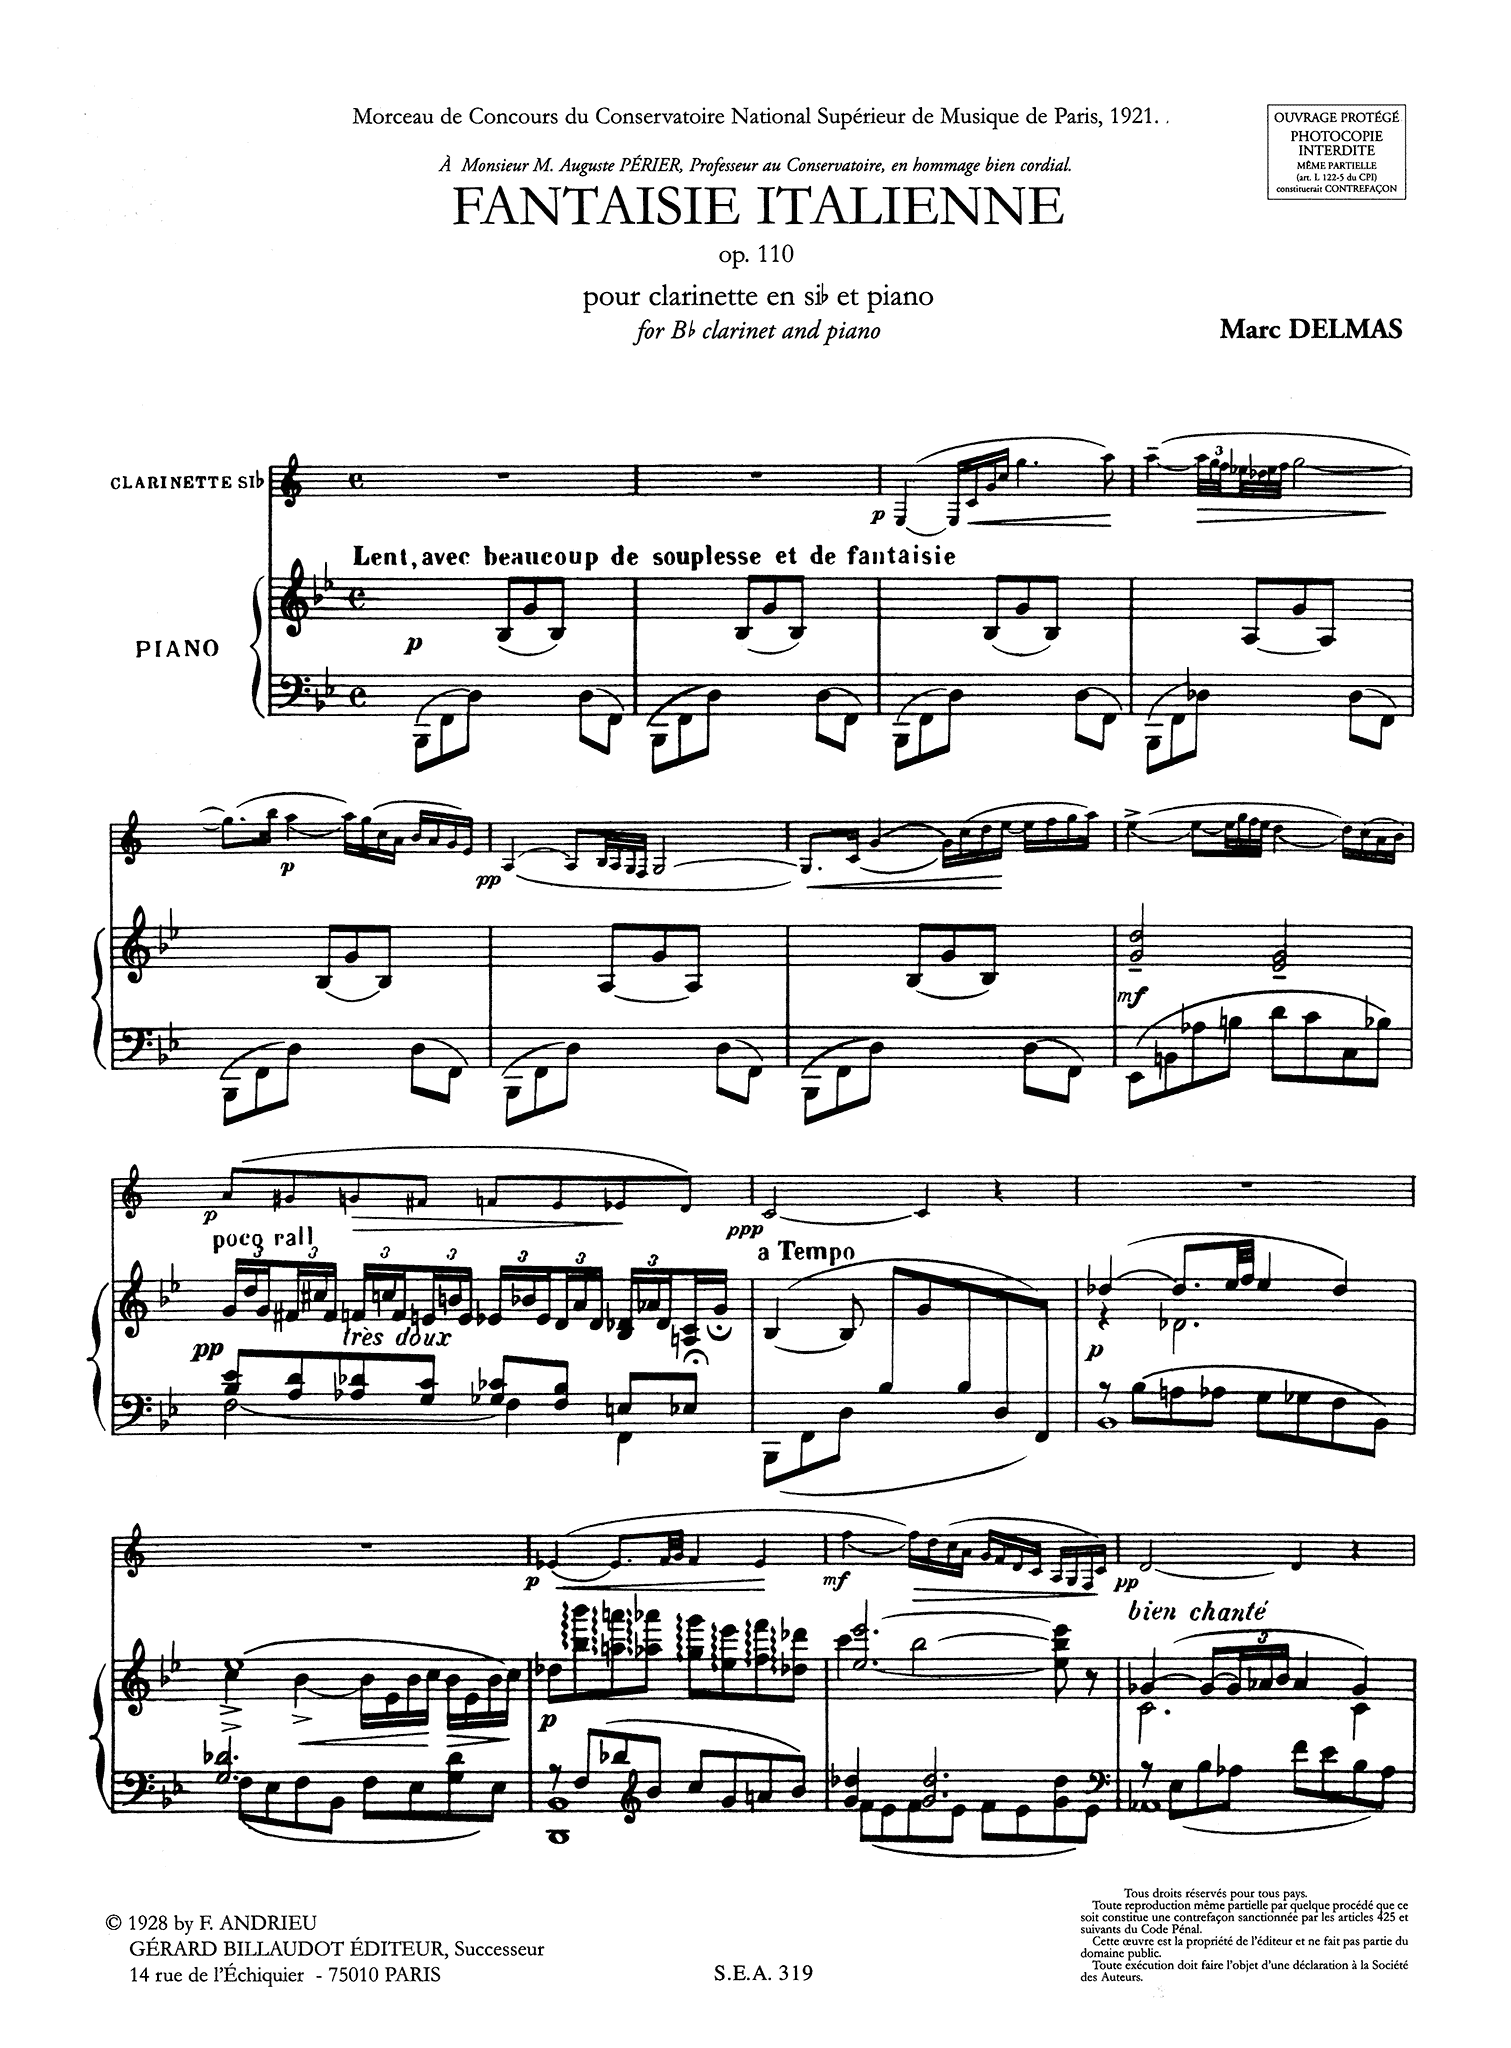 Delmas Fantaisie italienne, Op. 110 clarinet & piano score